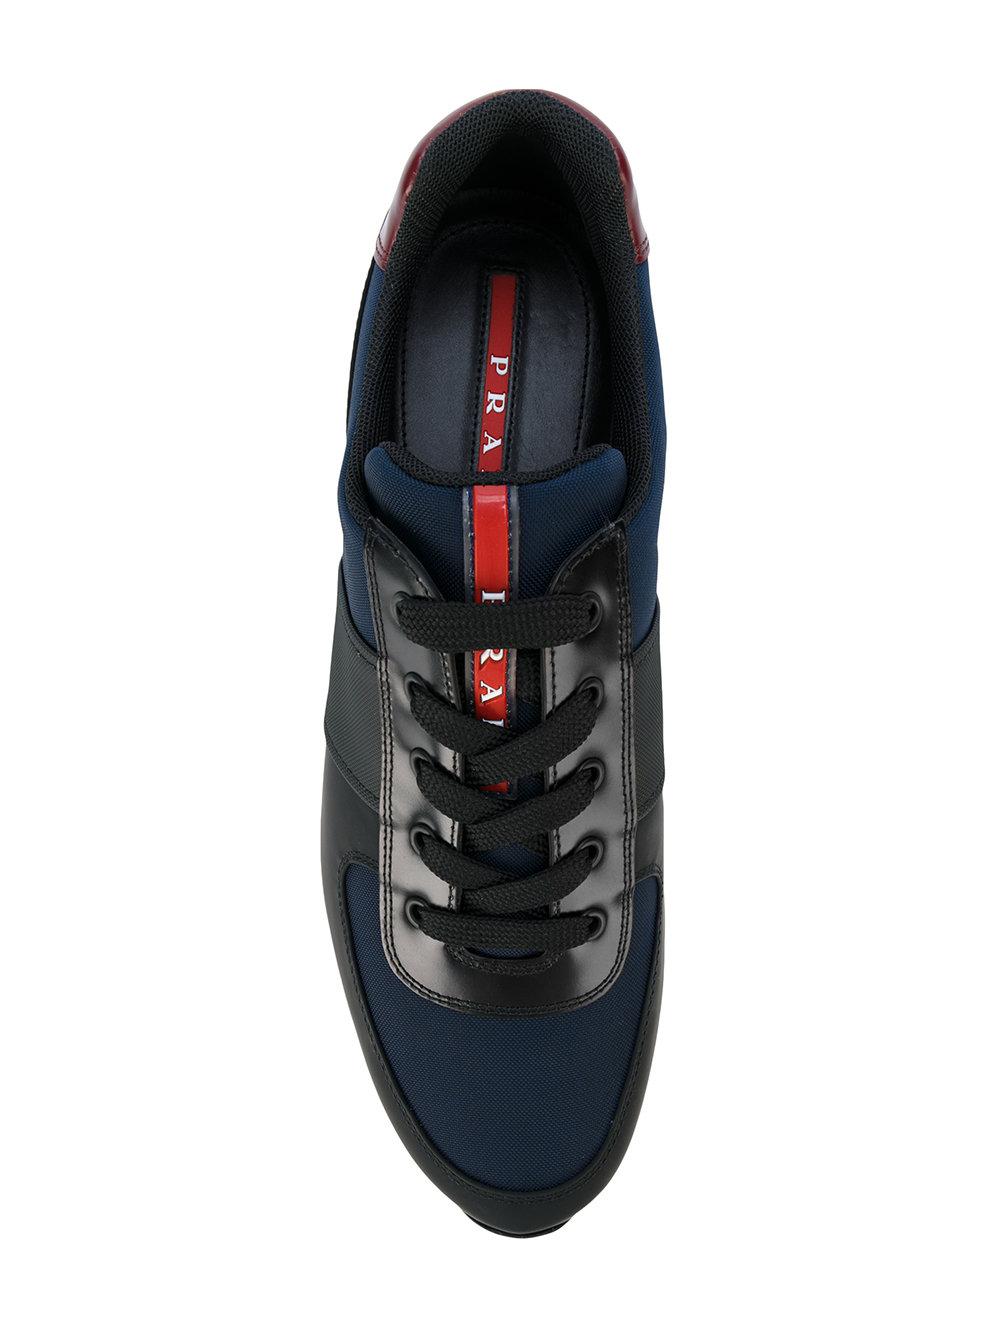 Prada Sneakers in Black for Men - Lyst